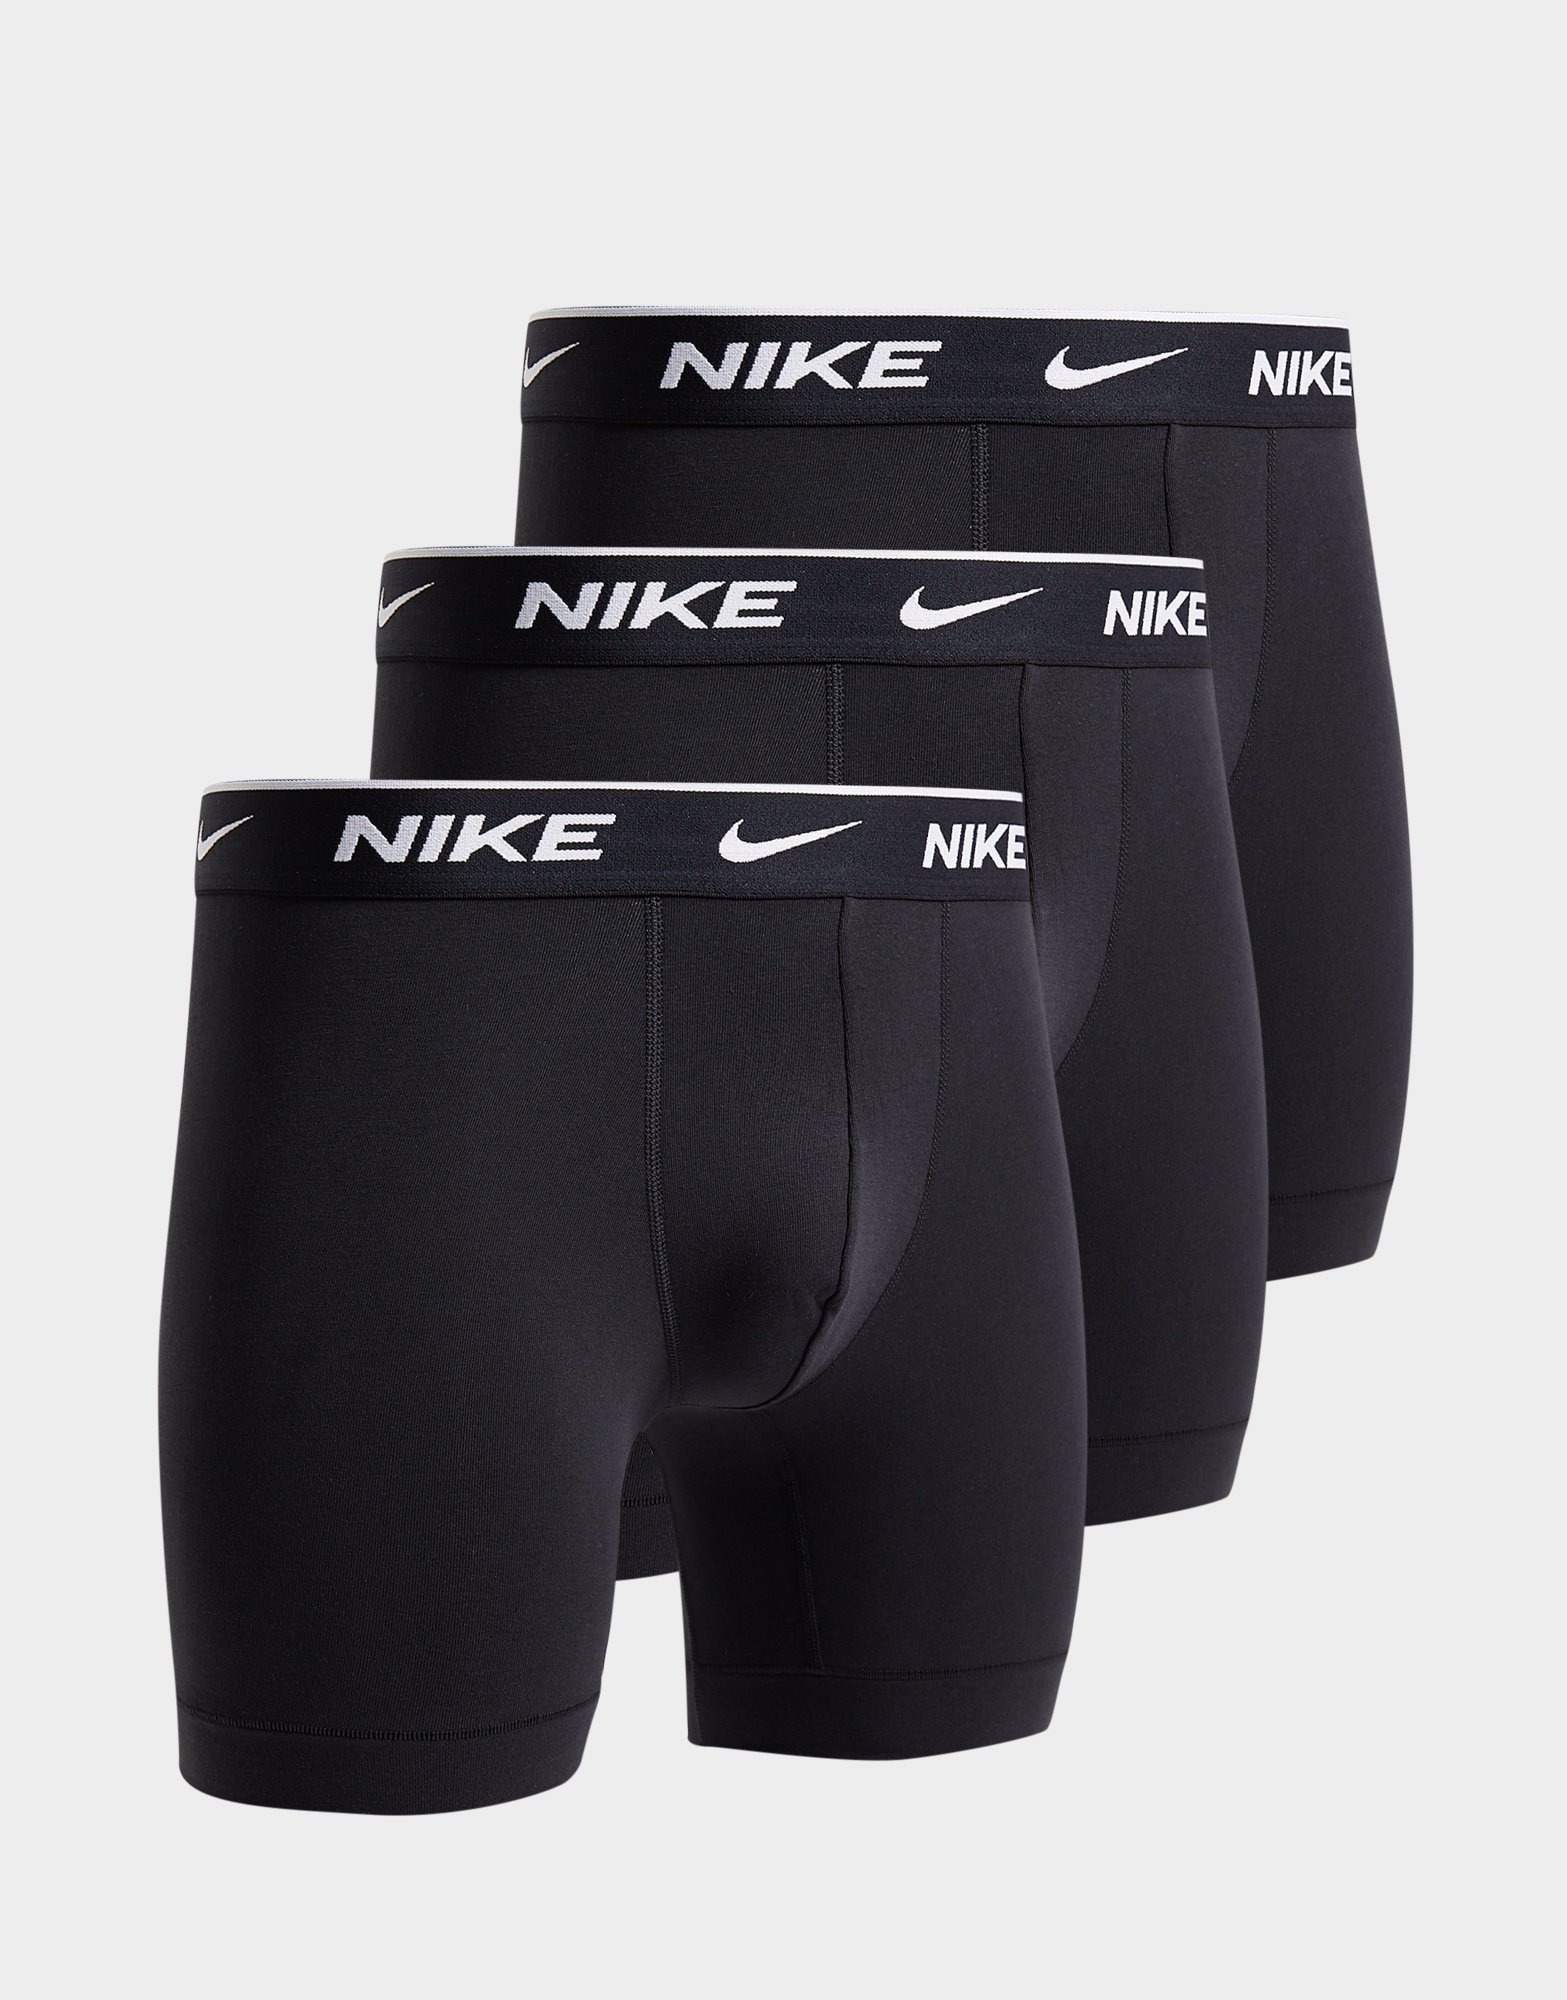 Men's 3-pack black boxers - NIKE - Pavidas